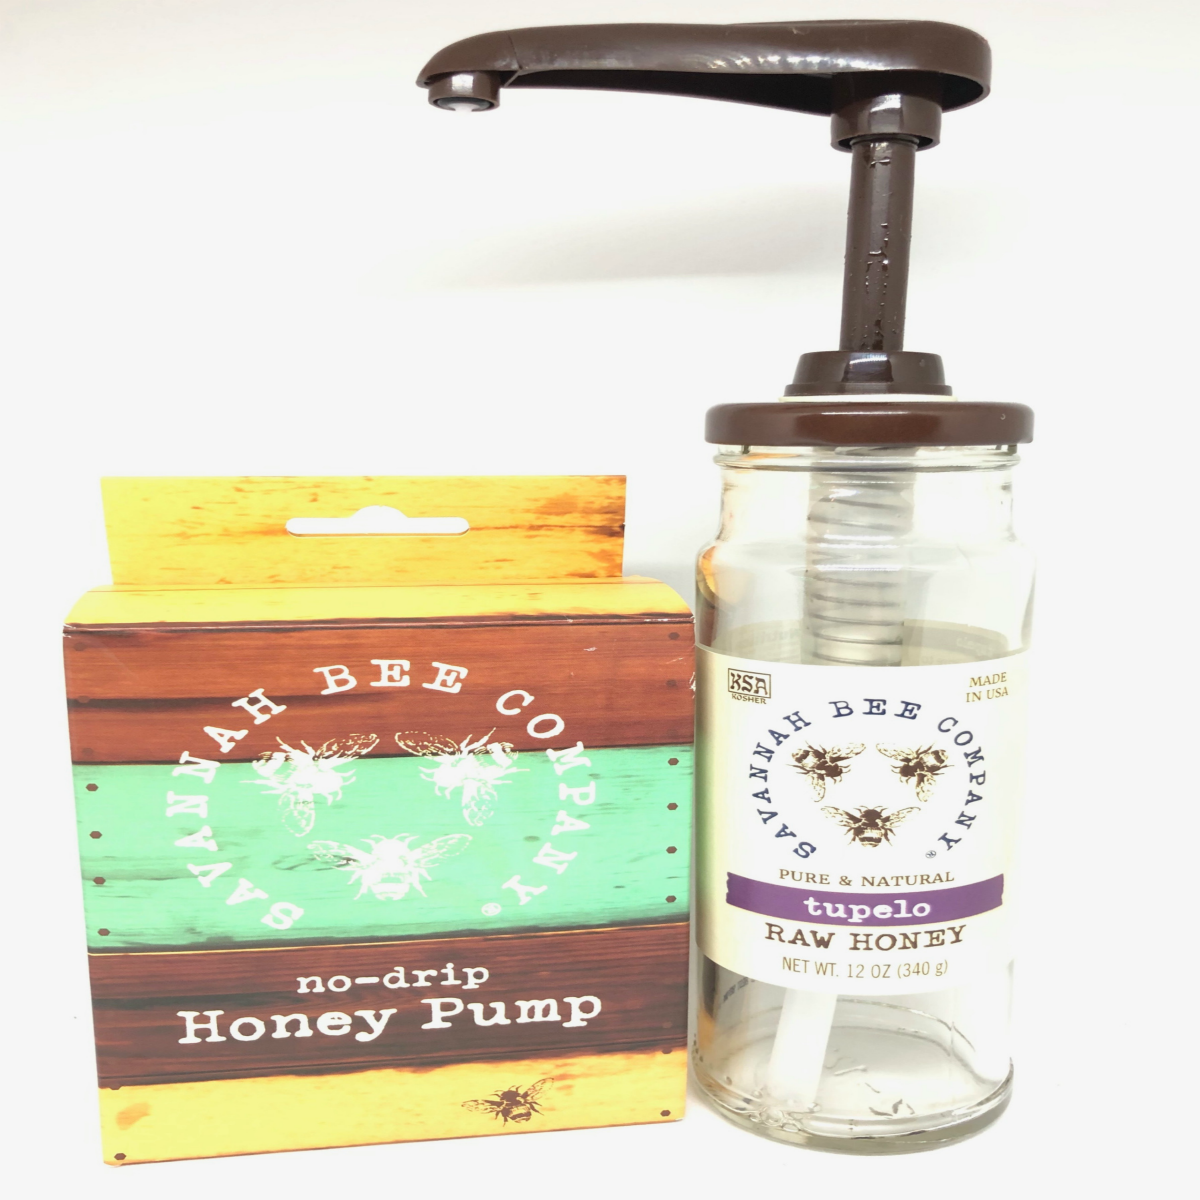 Savannah Bee Company Honey Pump